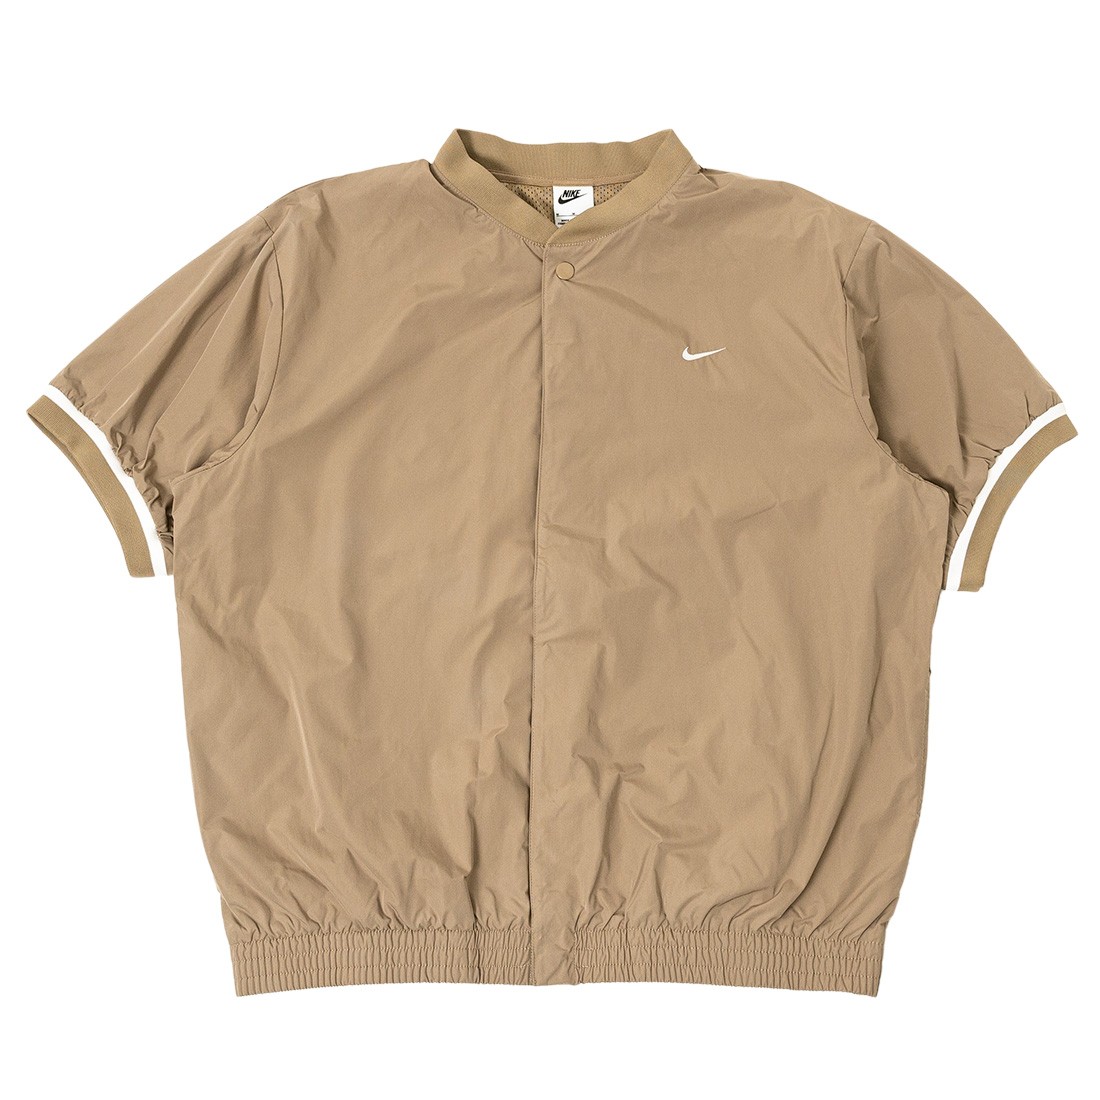 Nike Men Authentics Short Sleeve Shirt (khaki / white)